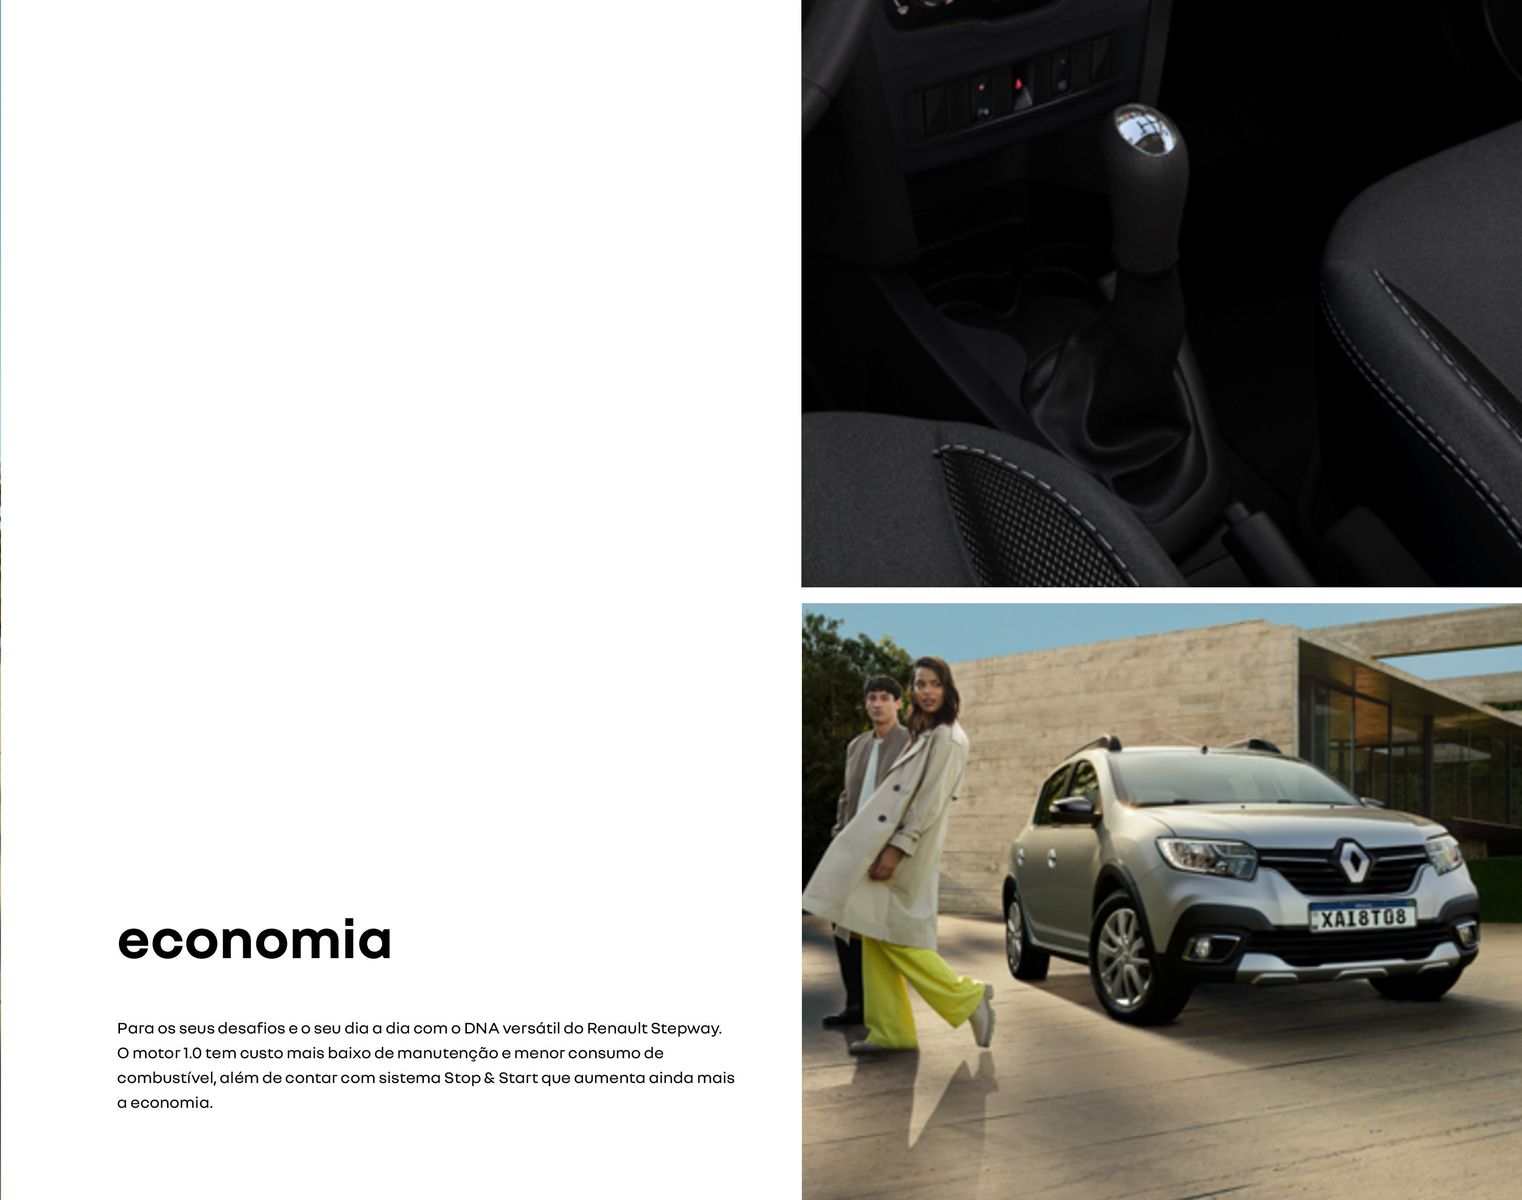 Renault Stepway - Economia com motor 1.0 e sistema Stop & Start